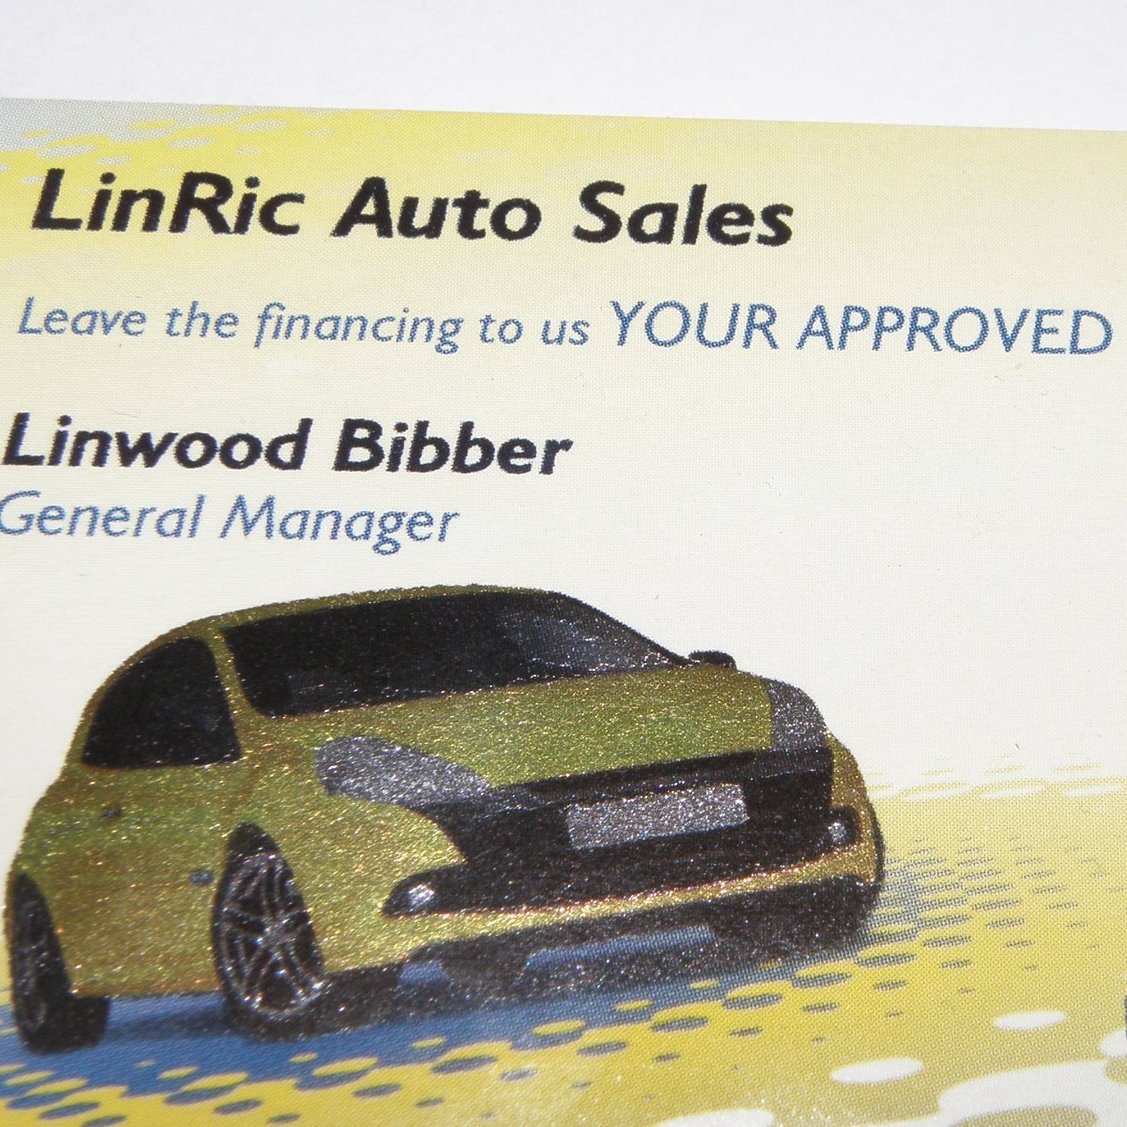 LinRic Auto Sales